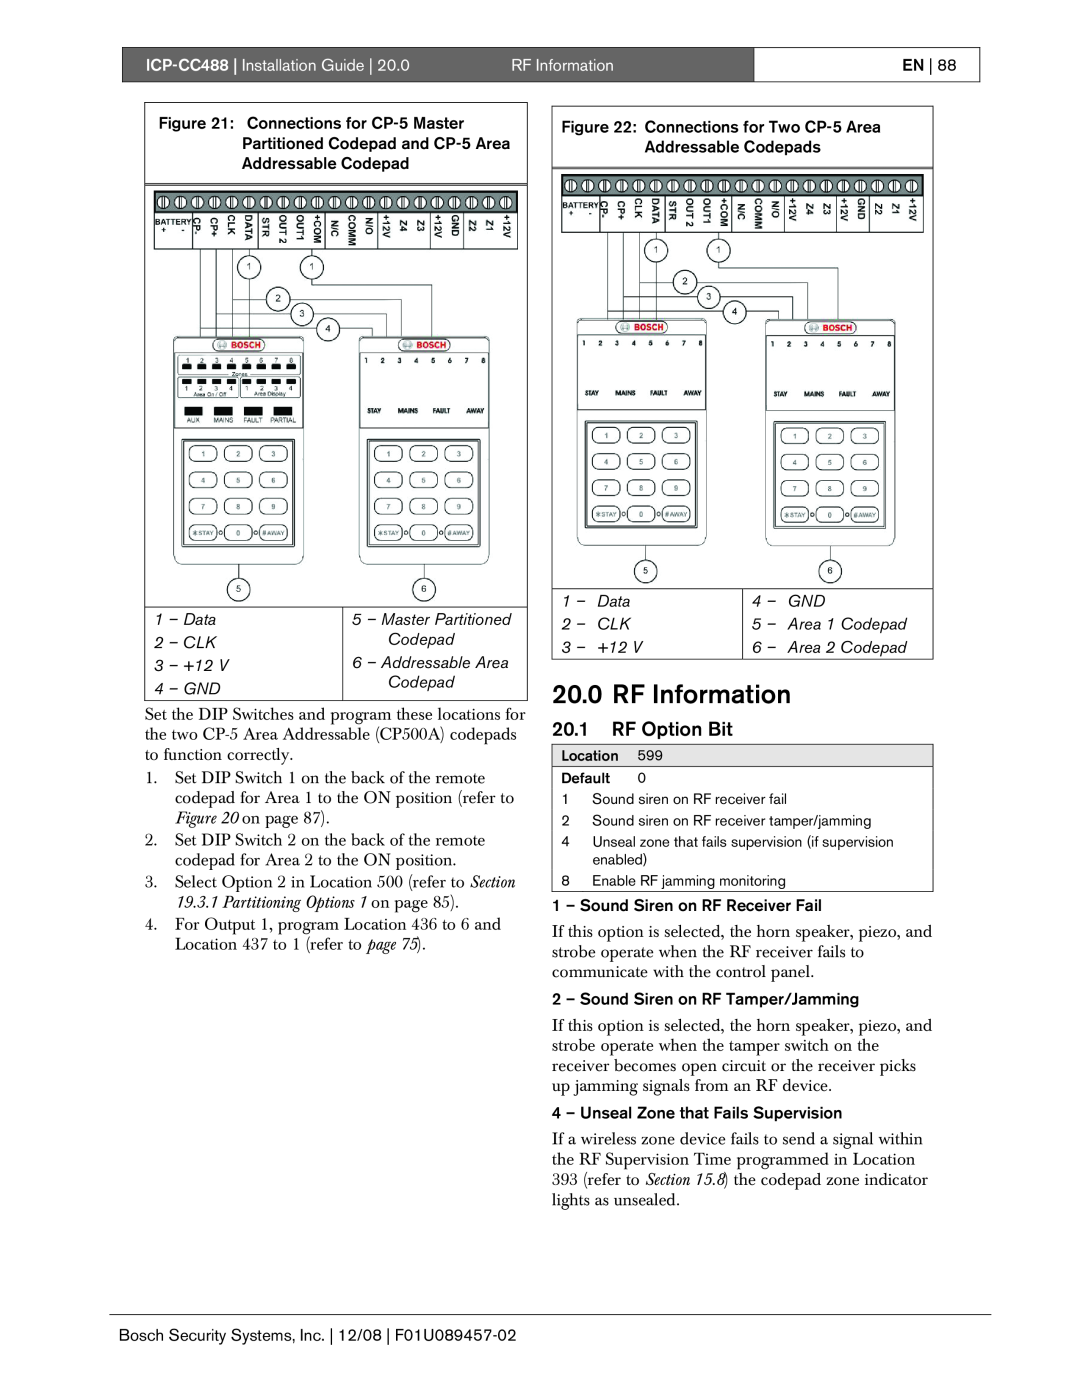 Bosch Appliances manual 20.0RF Information, 20.1RF Option Bit, ICP-CC488| Installation Guide 